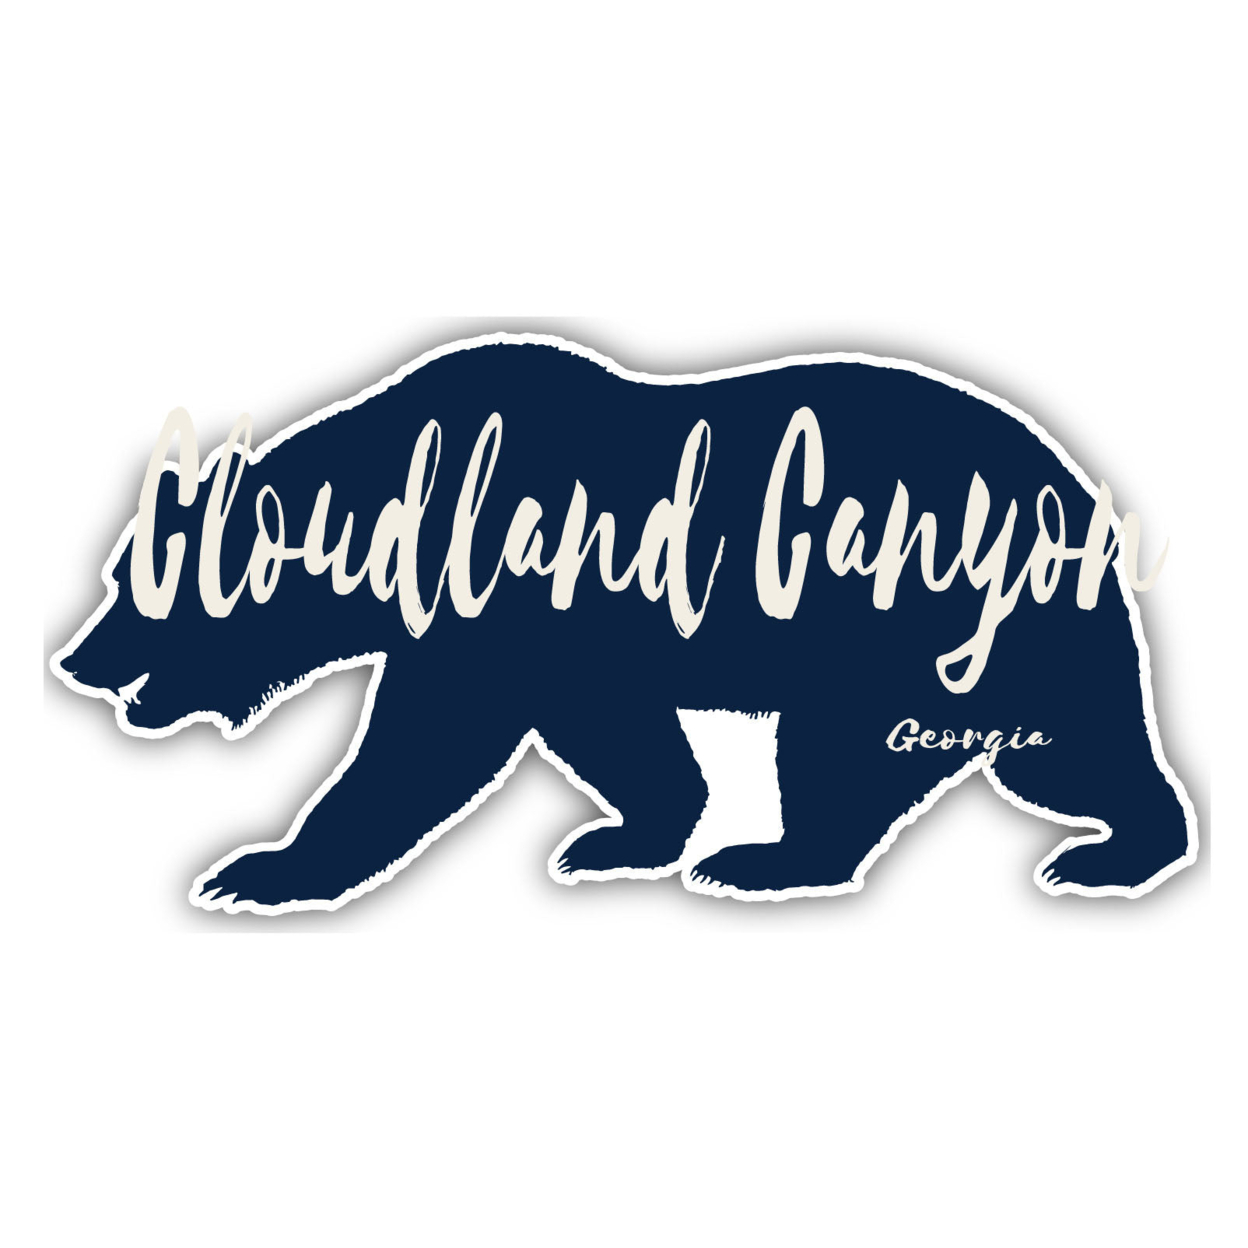 Cloudland Canyon Georgia Souvenir Decorative Stickers (Choose Theme And Size) - 4-Pack, 2-Inch, Bear